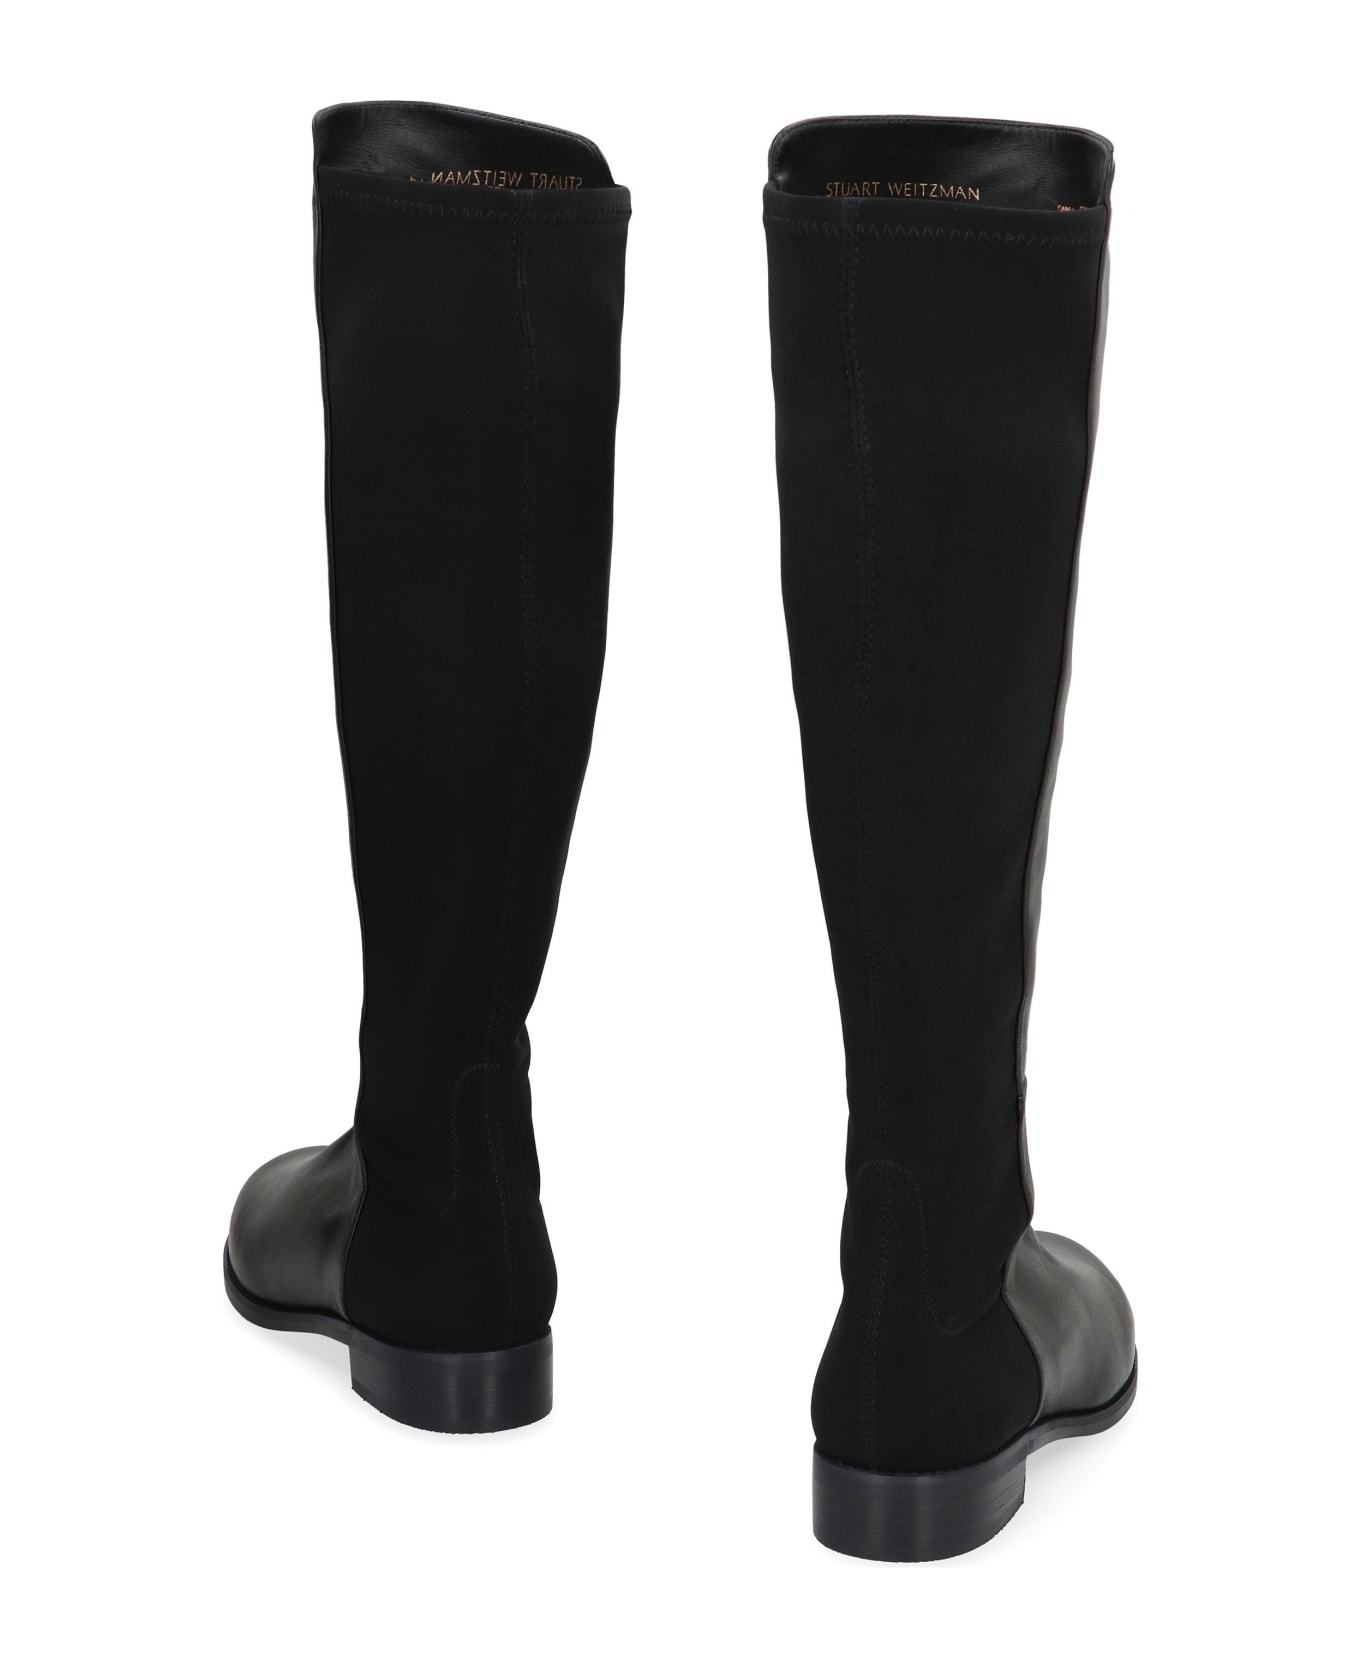 Stuart Weitzman Halfnhalf Leather And Stretch Fabric Boots - black ブーツ